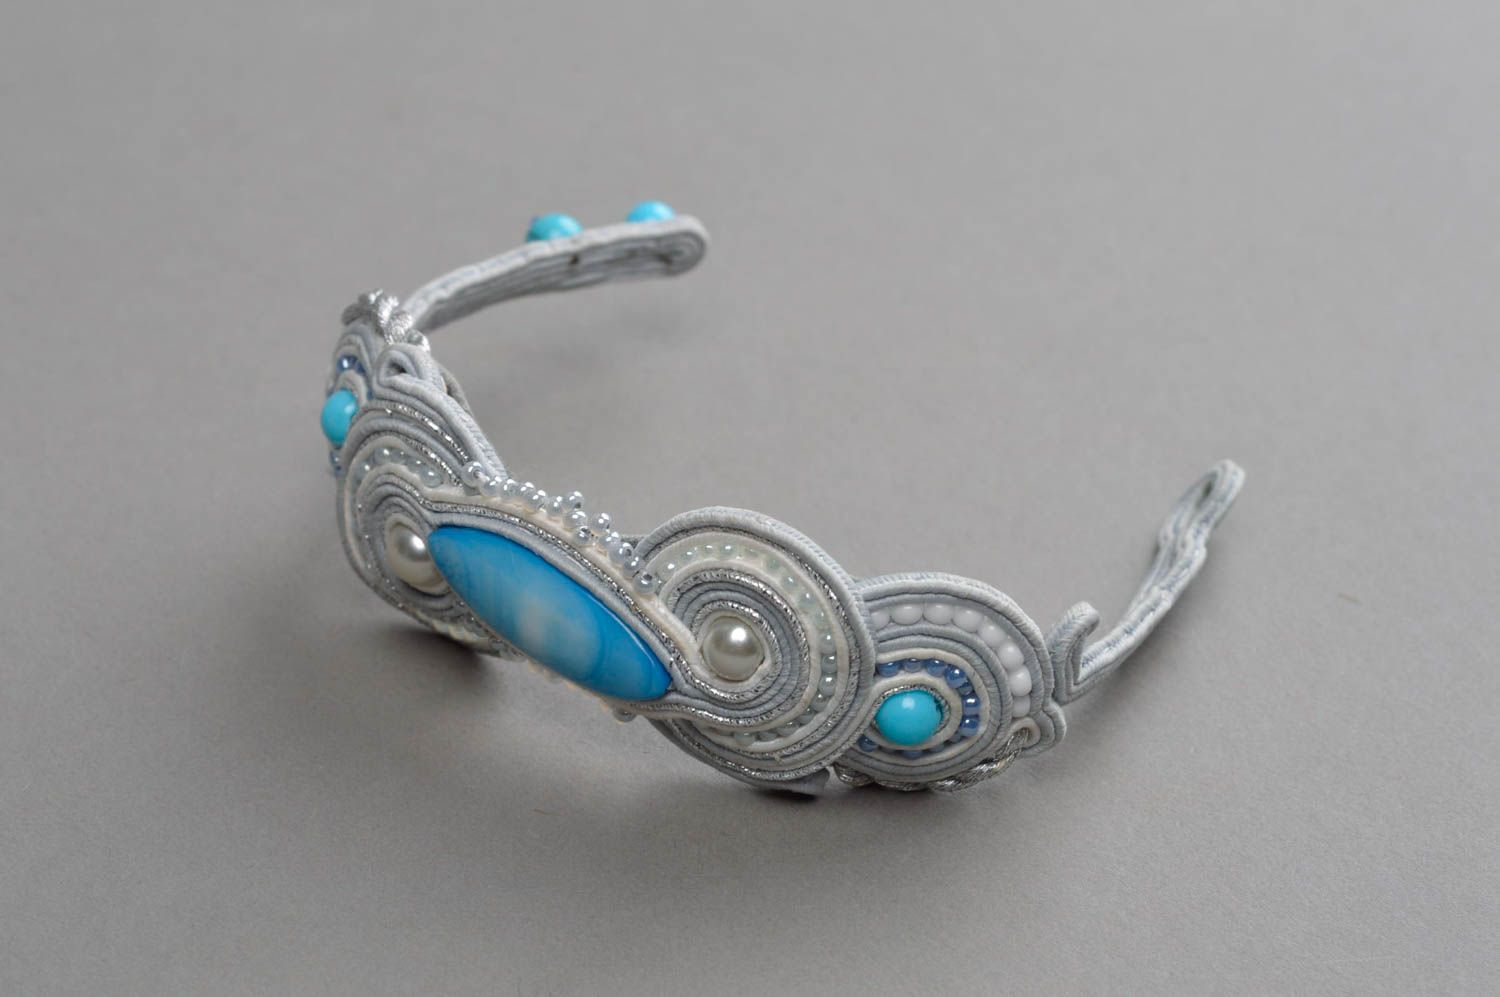 Wrist bracelet handmade soutache bracelet jewelry with embroidery for women photo 2